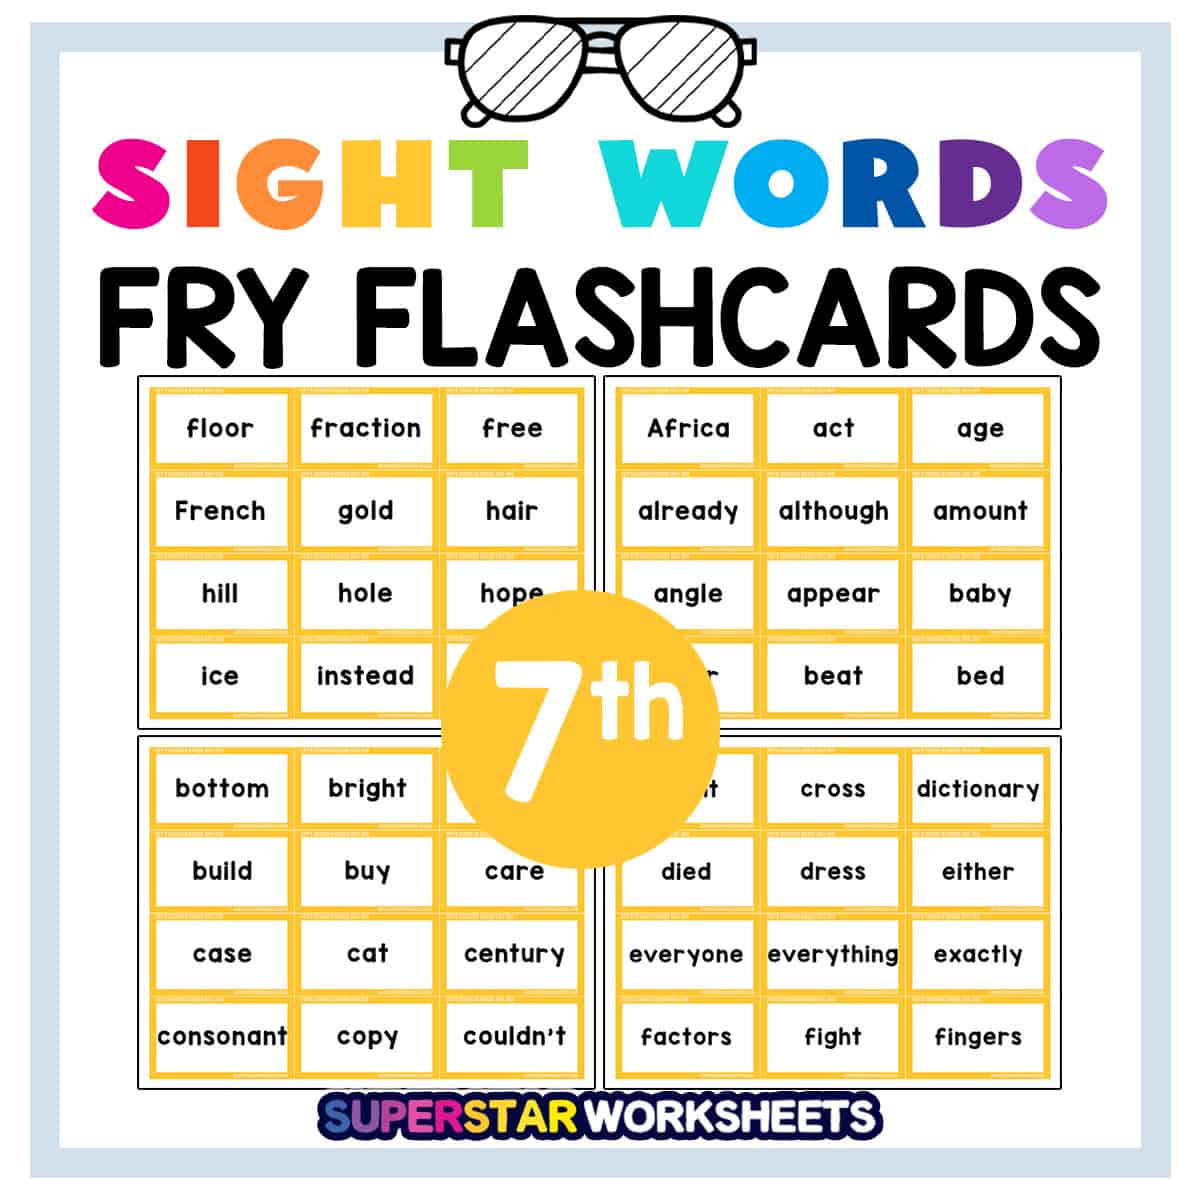 Sight Word Flashcards - Superstar Worksheets